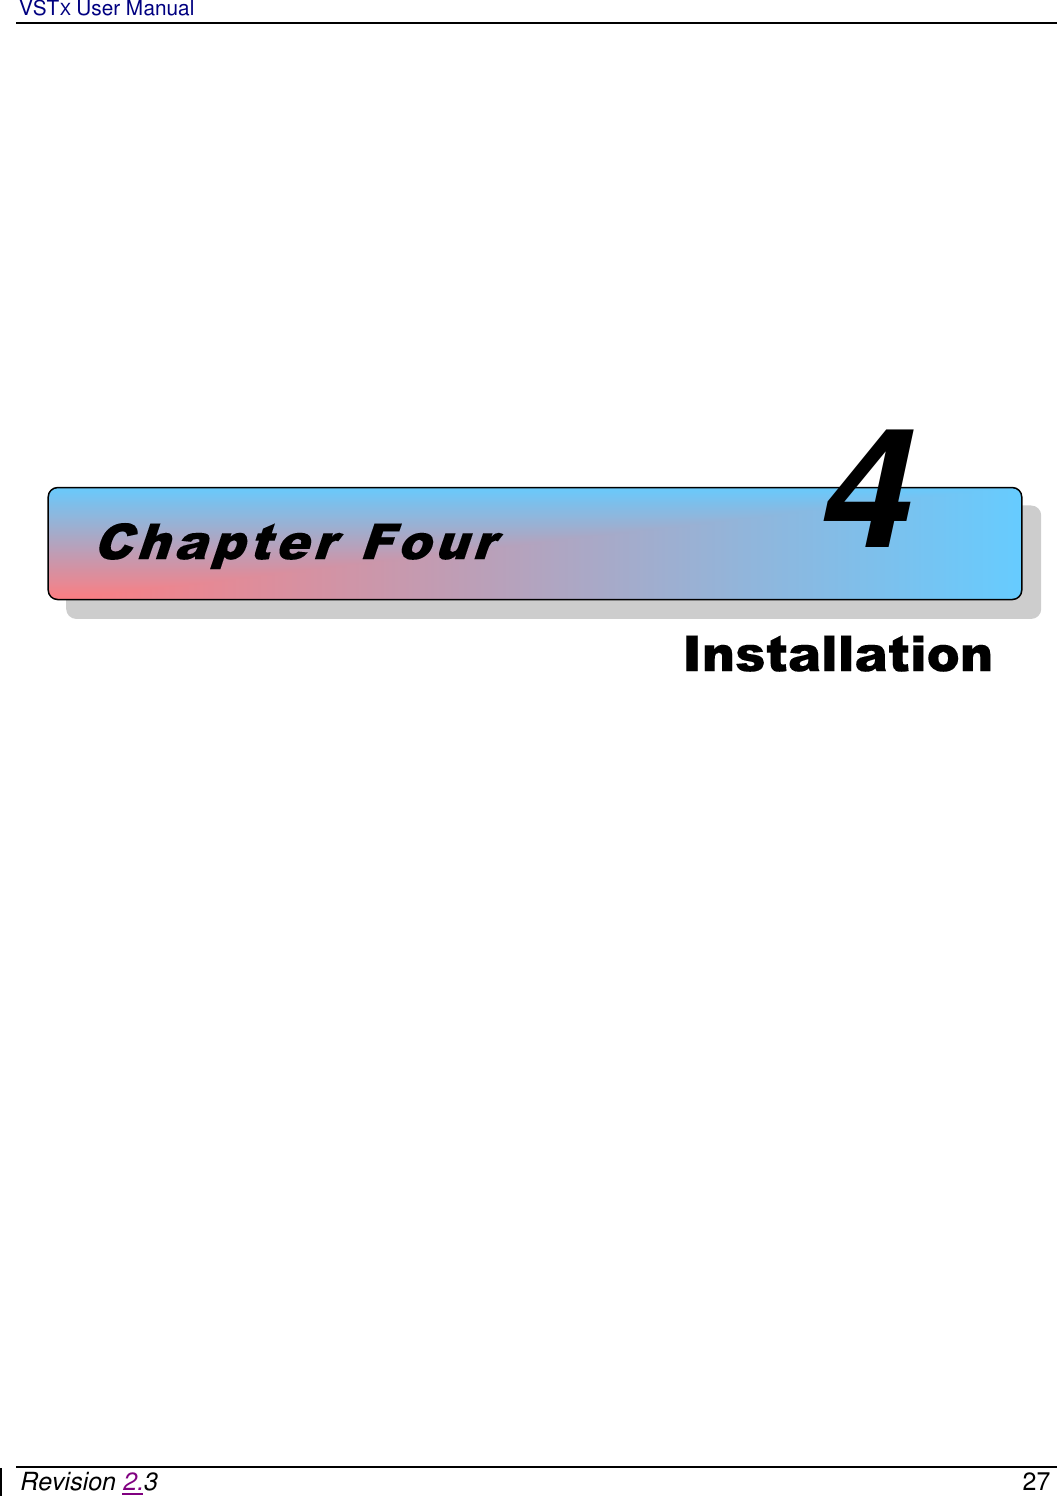 VSTX User Manual   Revision 2.3    27            Chapter Four4Installation  